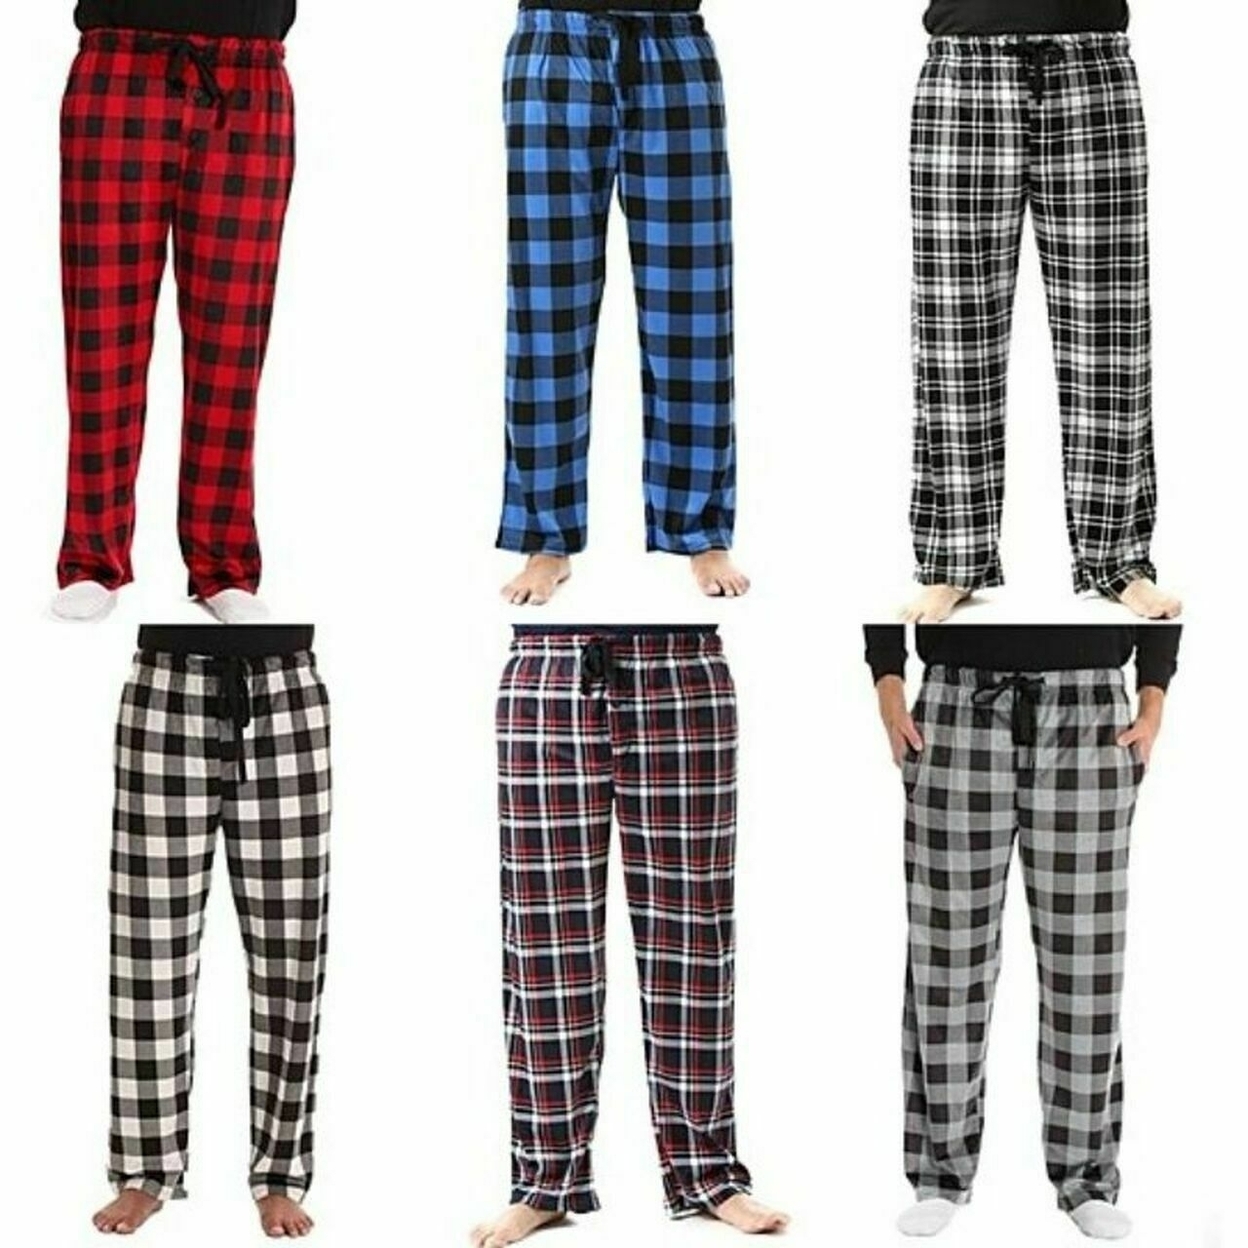 2-Pack: Men's Ultra Soft Cozy Flannel Fleece Plaid Pajama Sleep Bottom Lounge Pants - Black & Red, Small